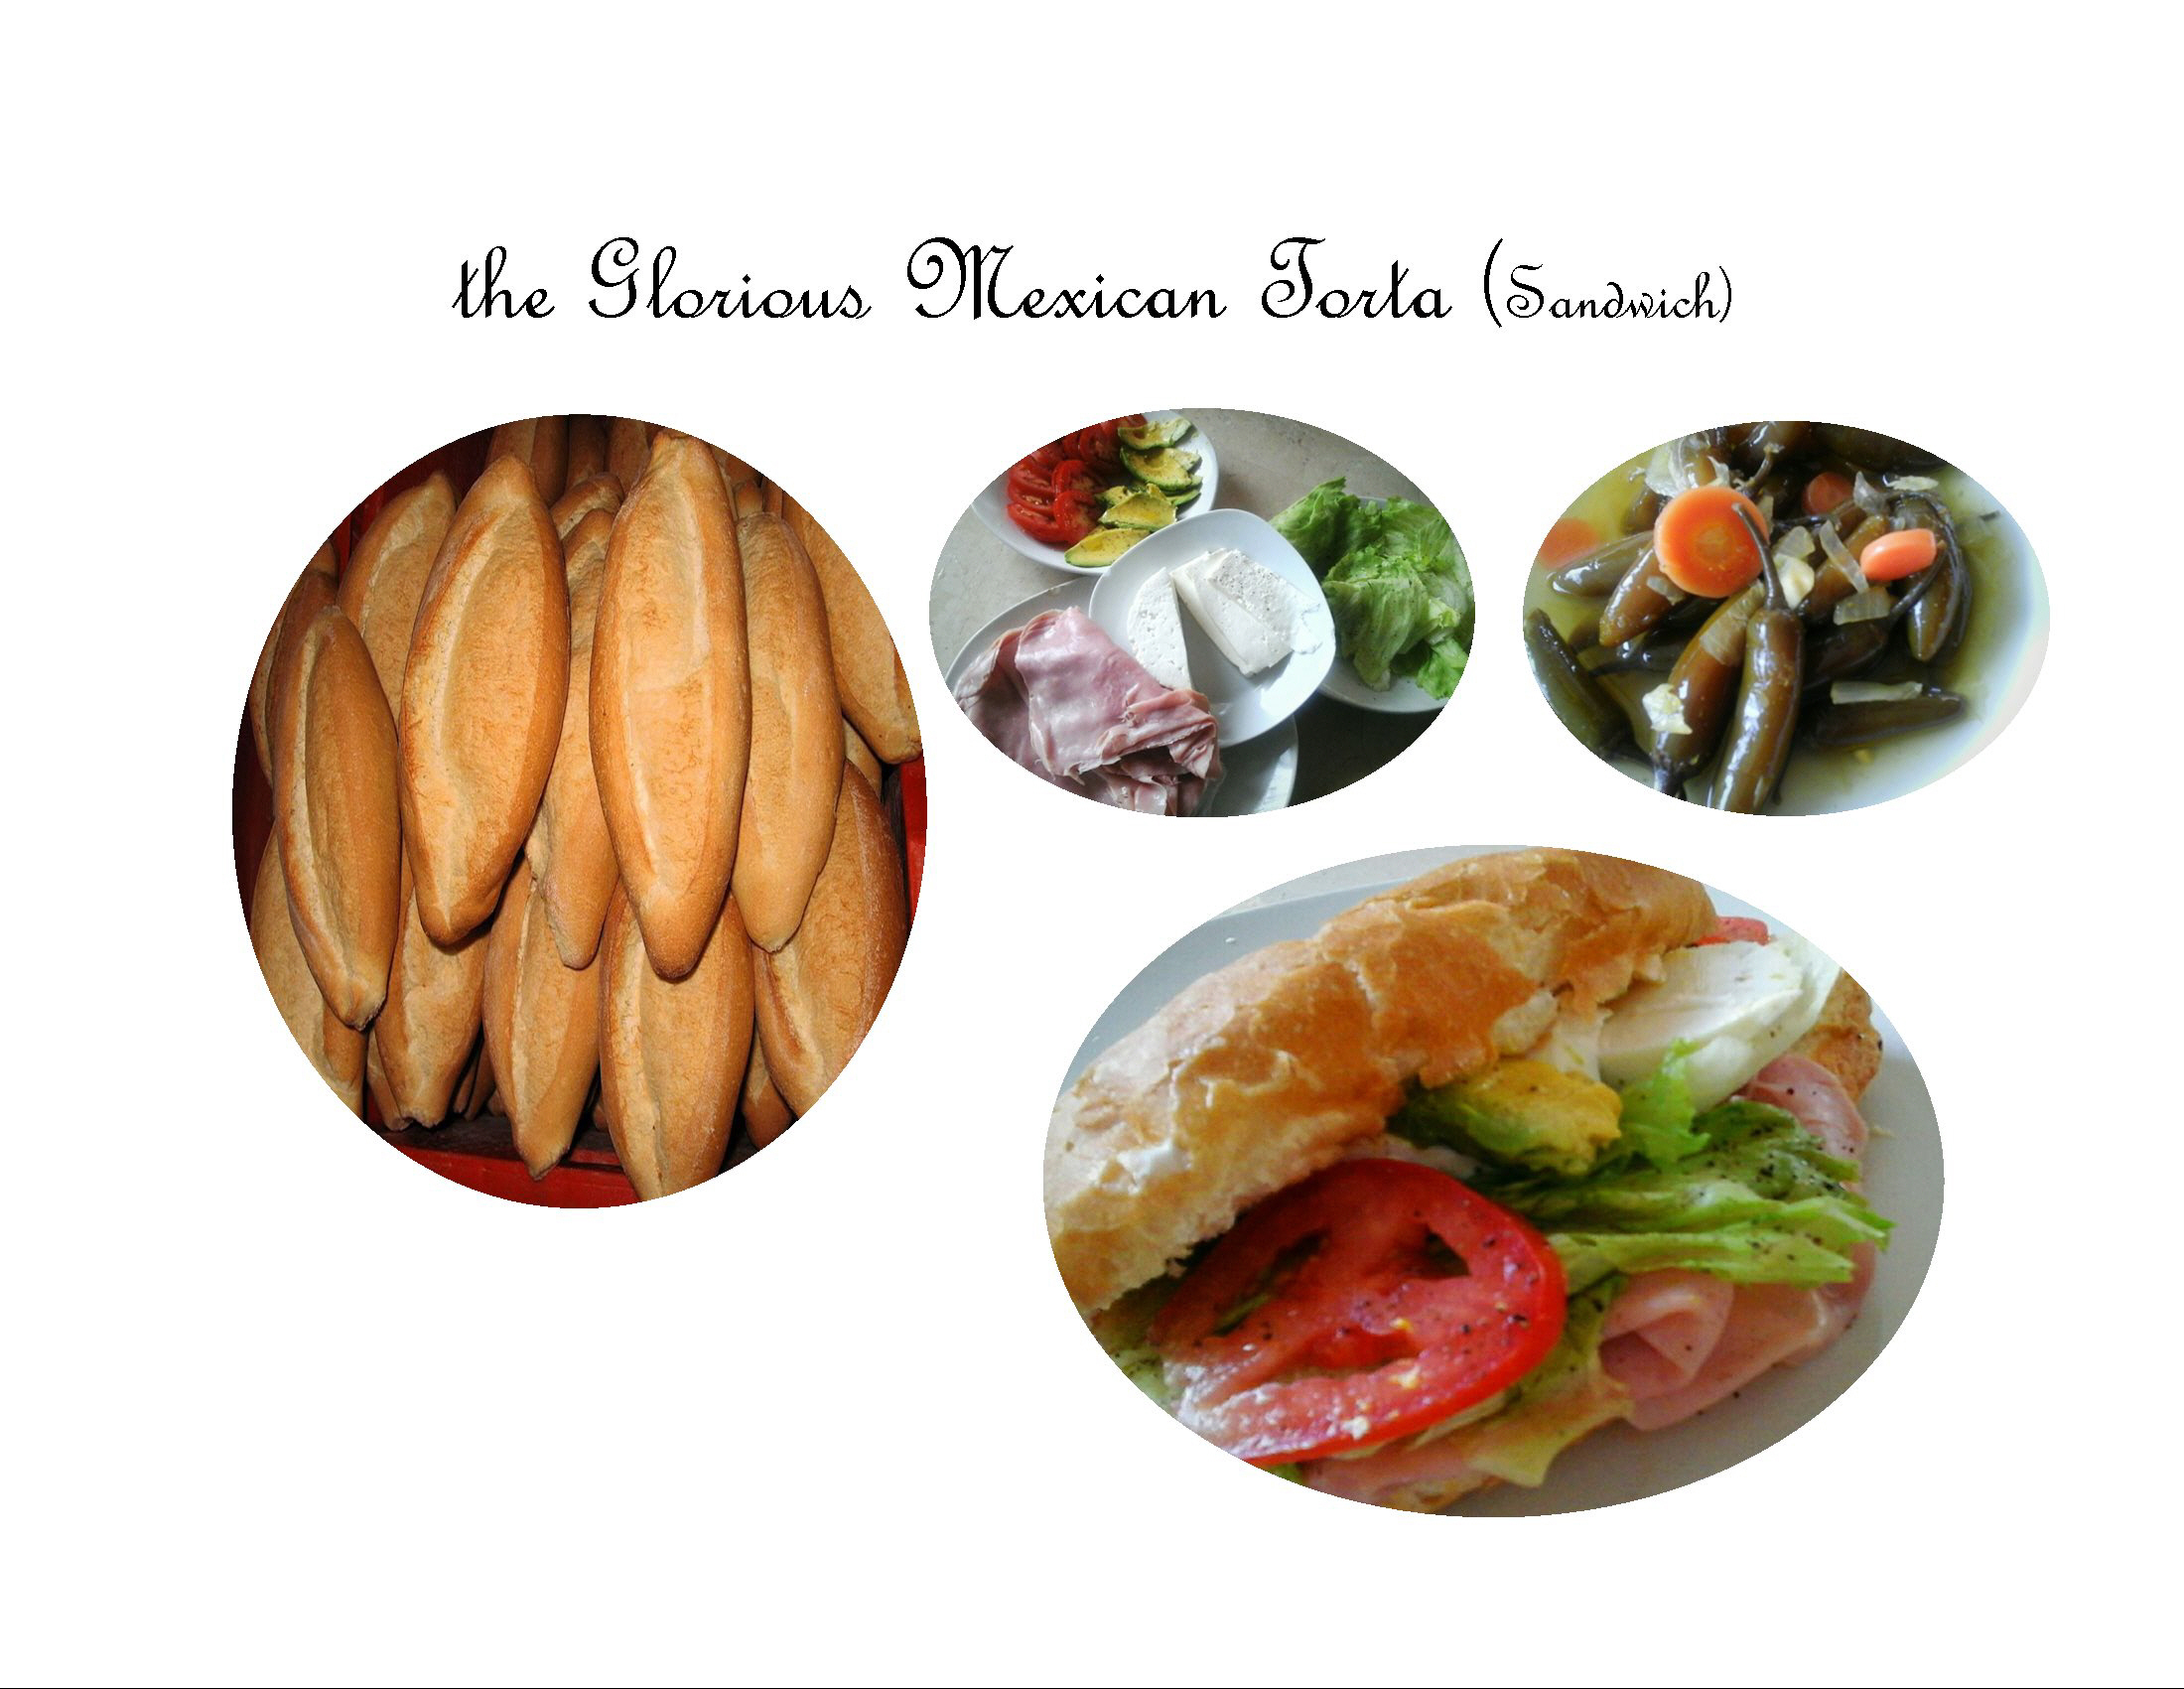 2 the Glorious Mexican Torta (Sandwich) (3).jpg